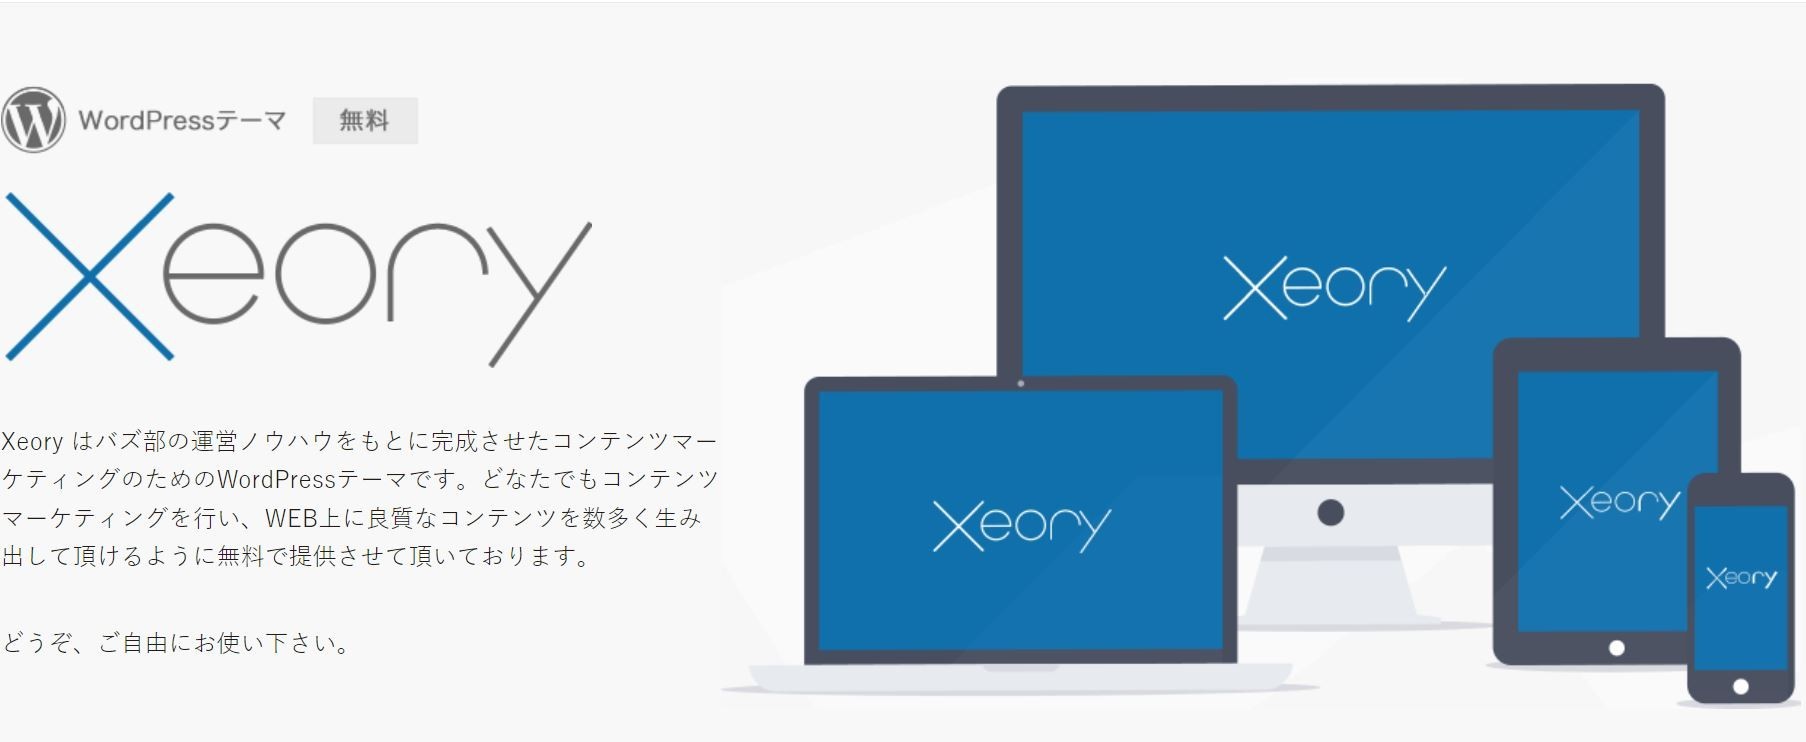 Xeory-無料WordPressテーマ-